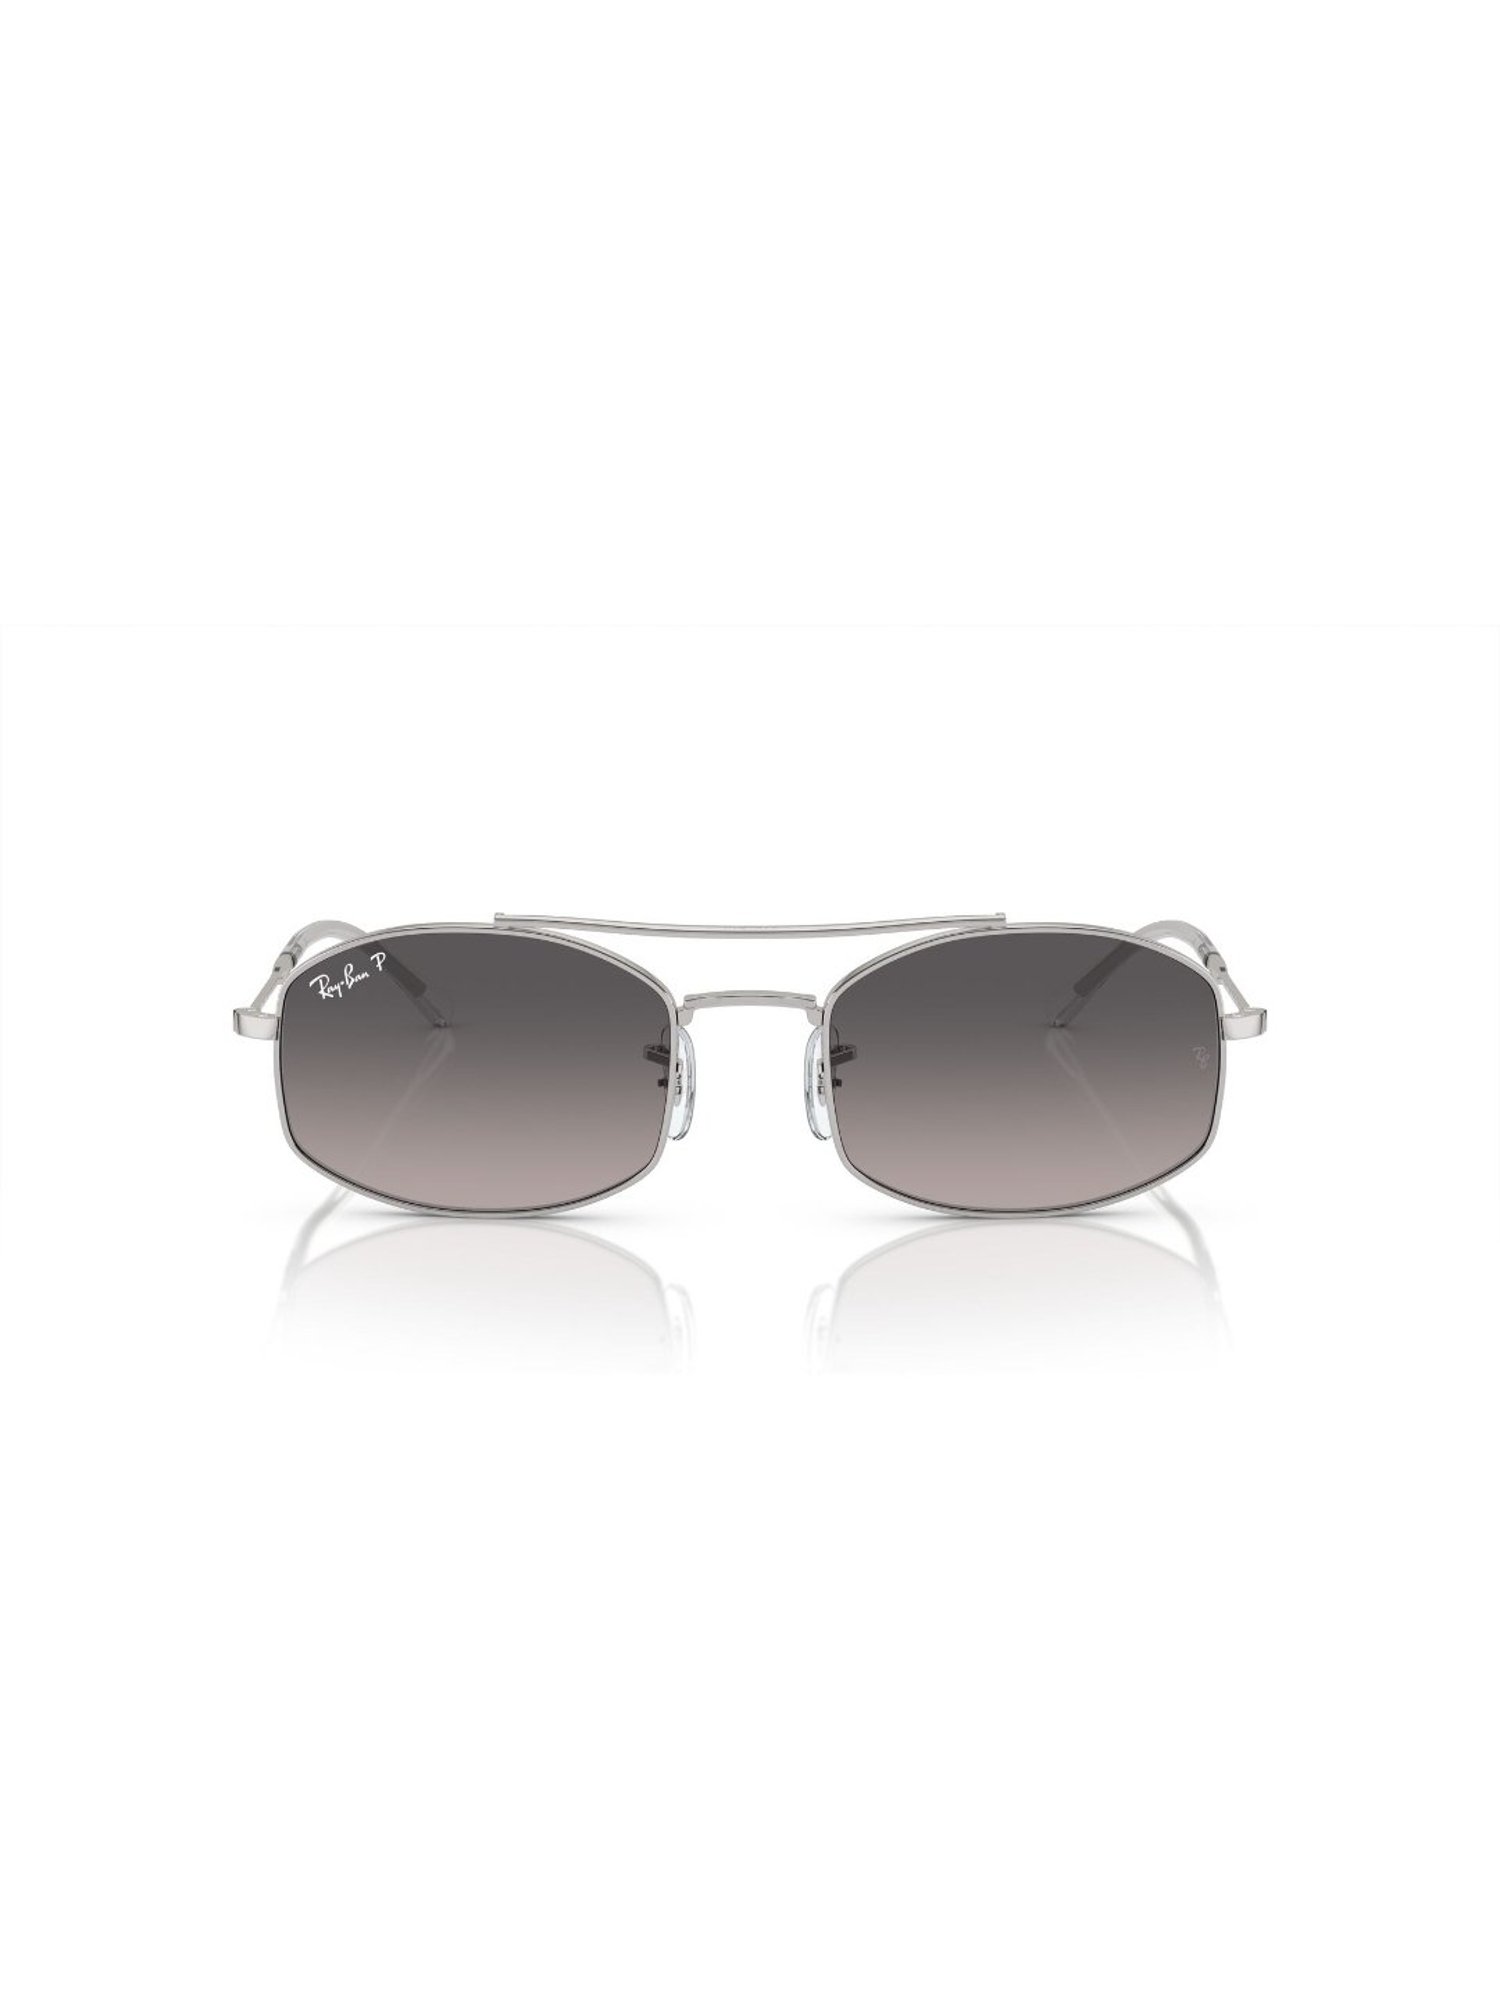 Ray-Ban Men Polarized Blue Lens Square Sunglasses - 0RB8157 : Amazon.in:  Fashion